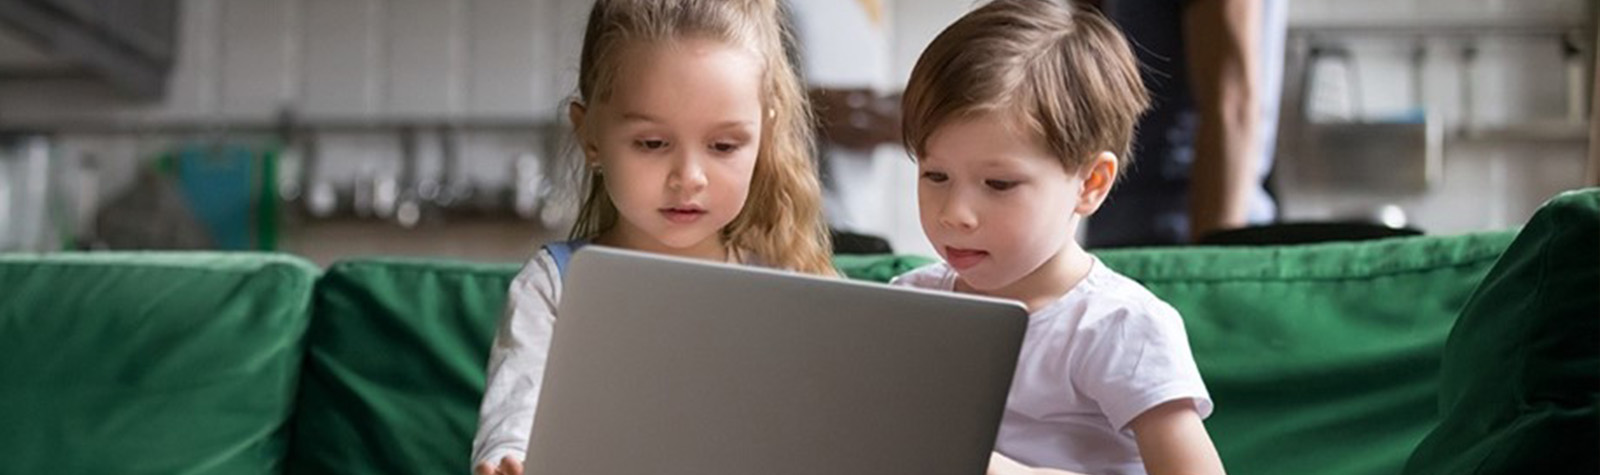 two-kids-laptop